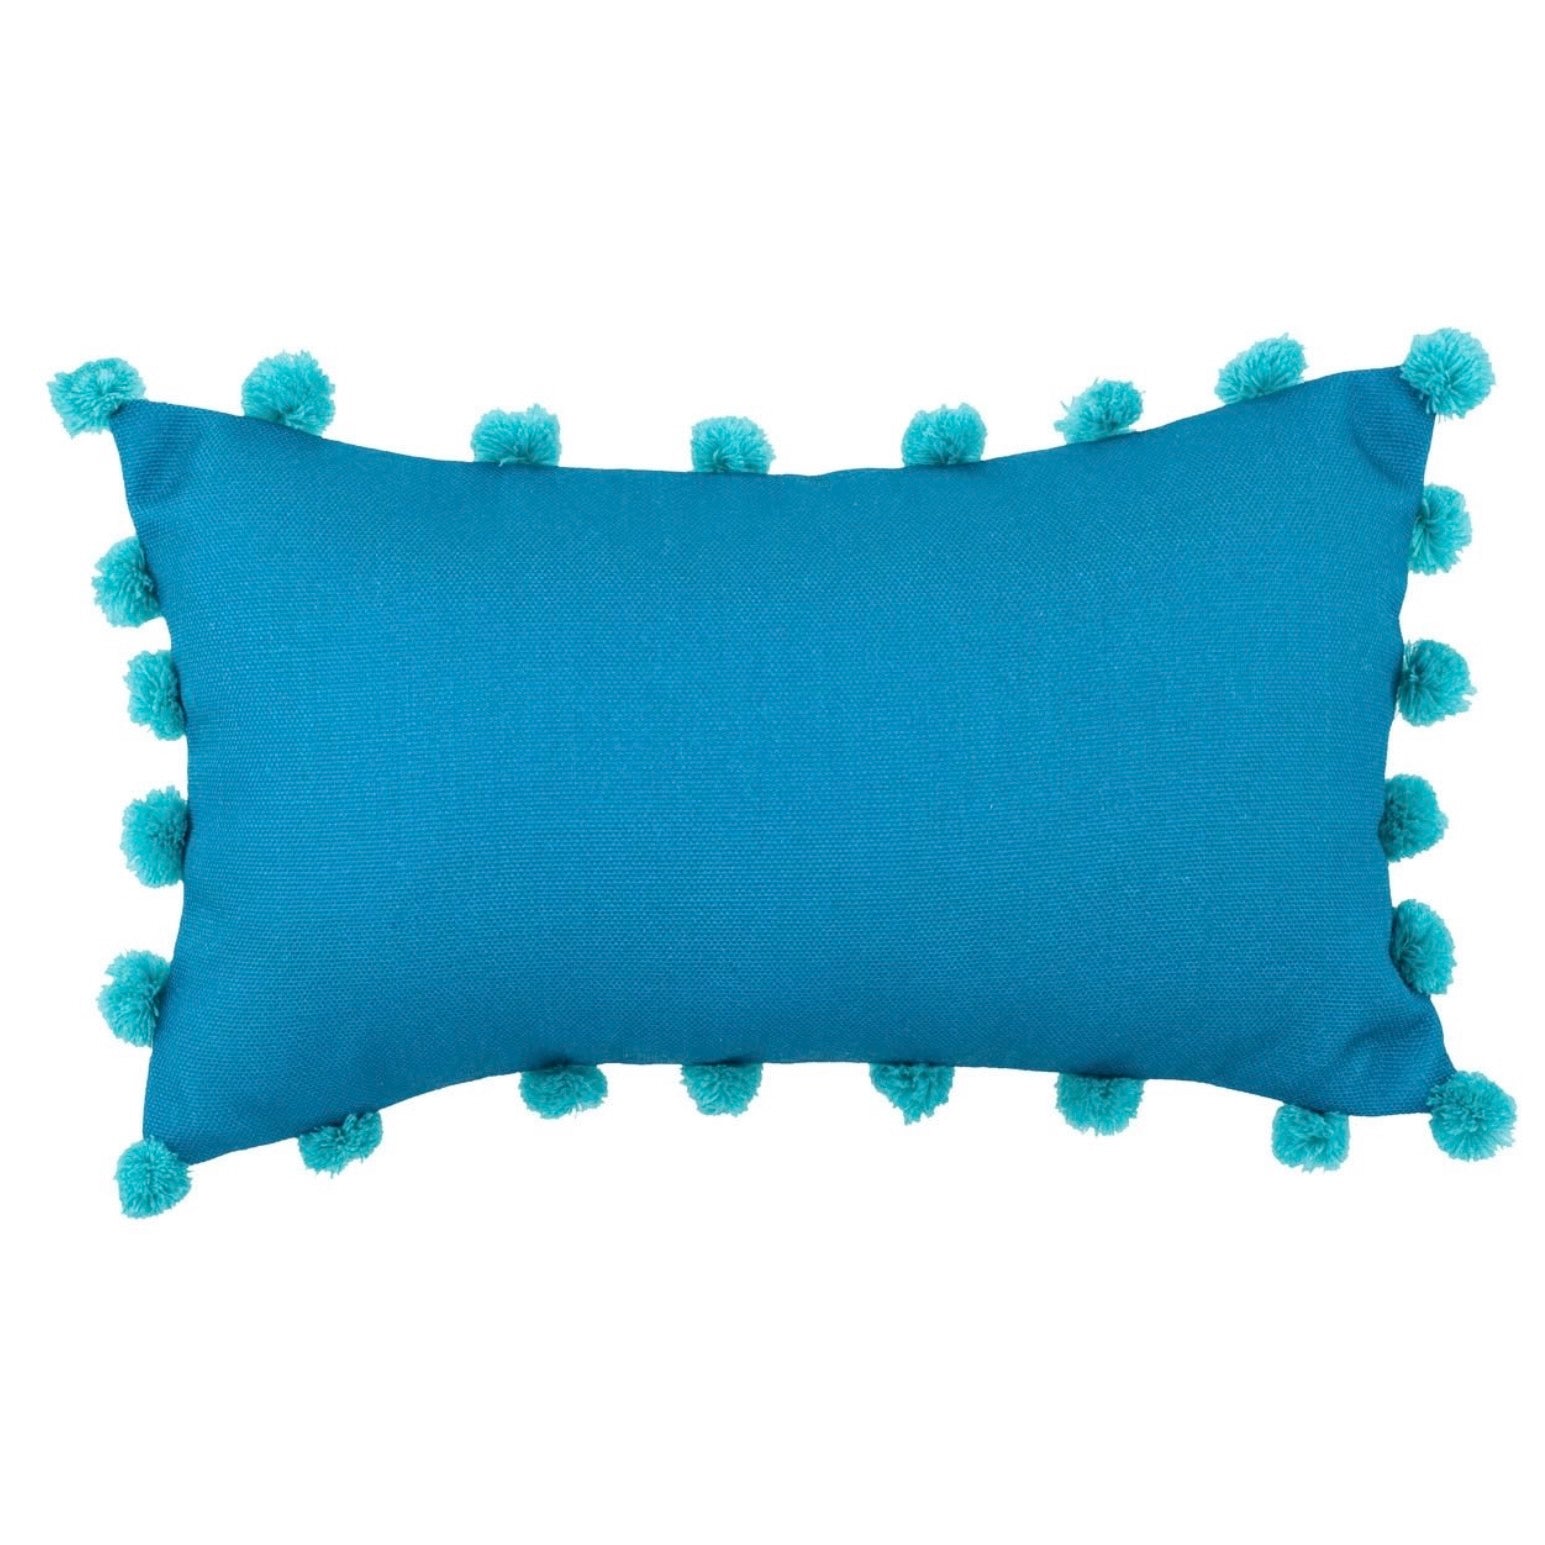 Aqua Pom Pom Rectangular Indoor/Outdoor Pillow